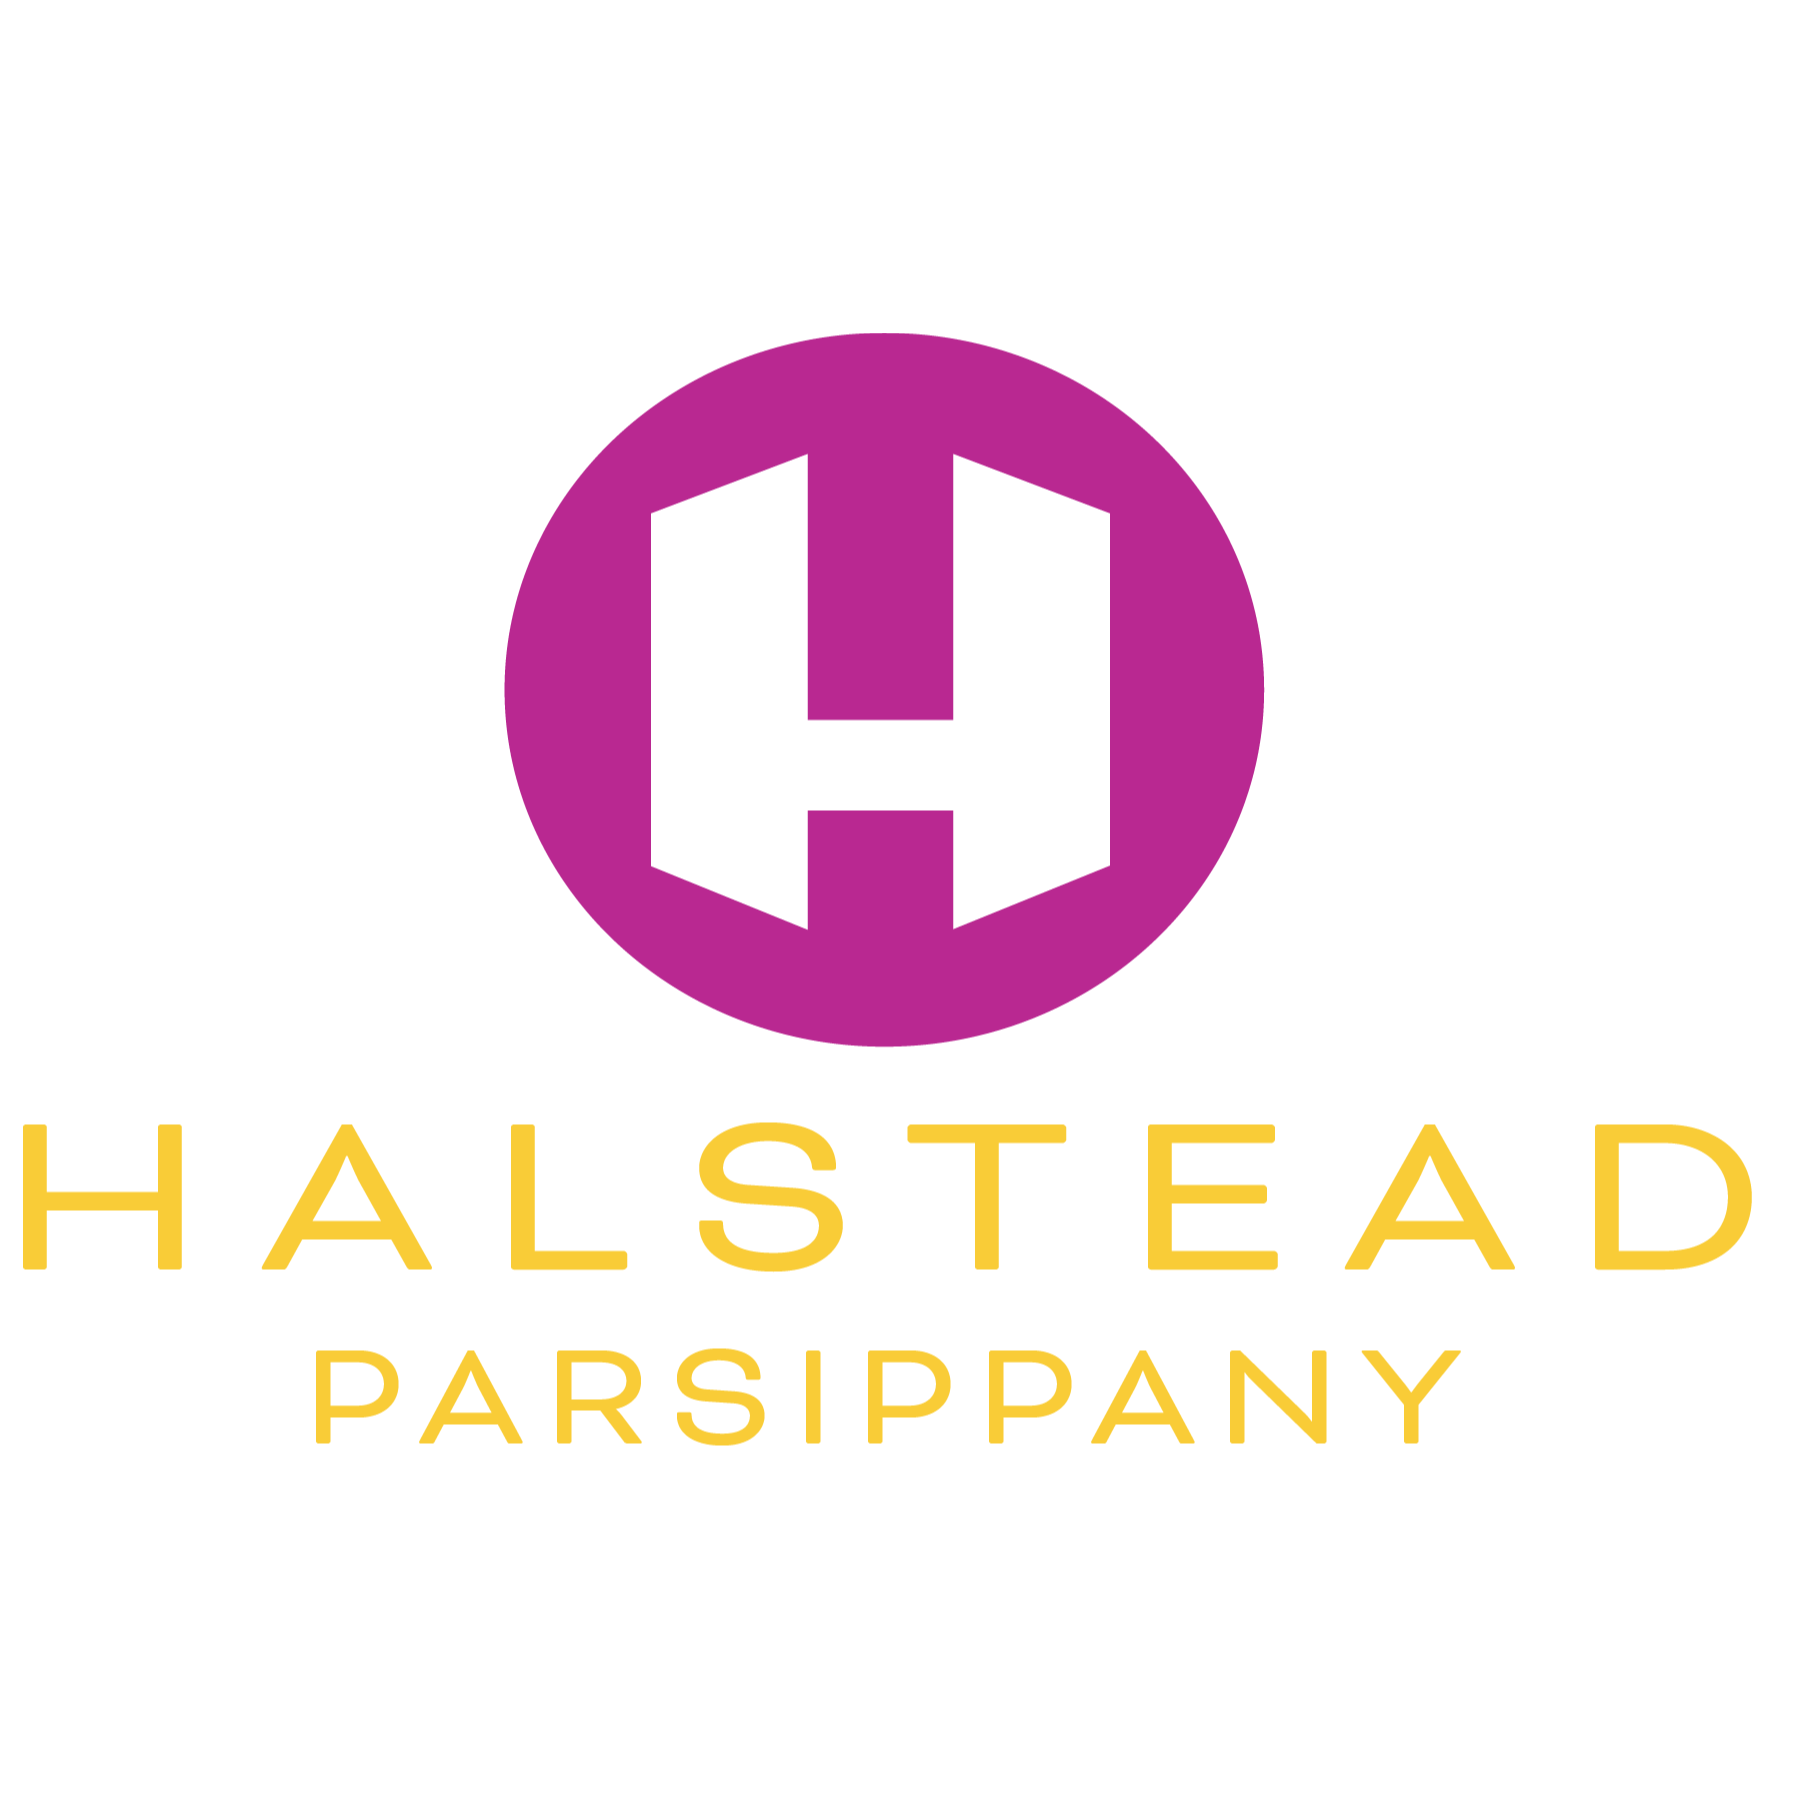 Halstead Parsippany